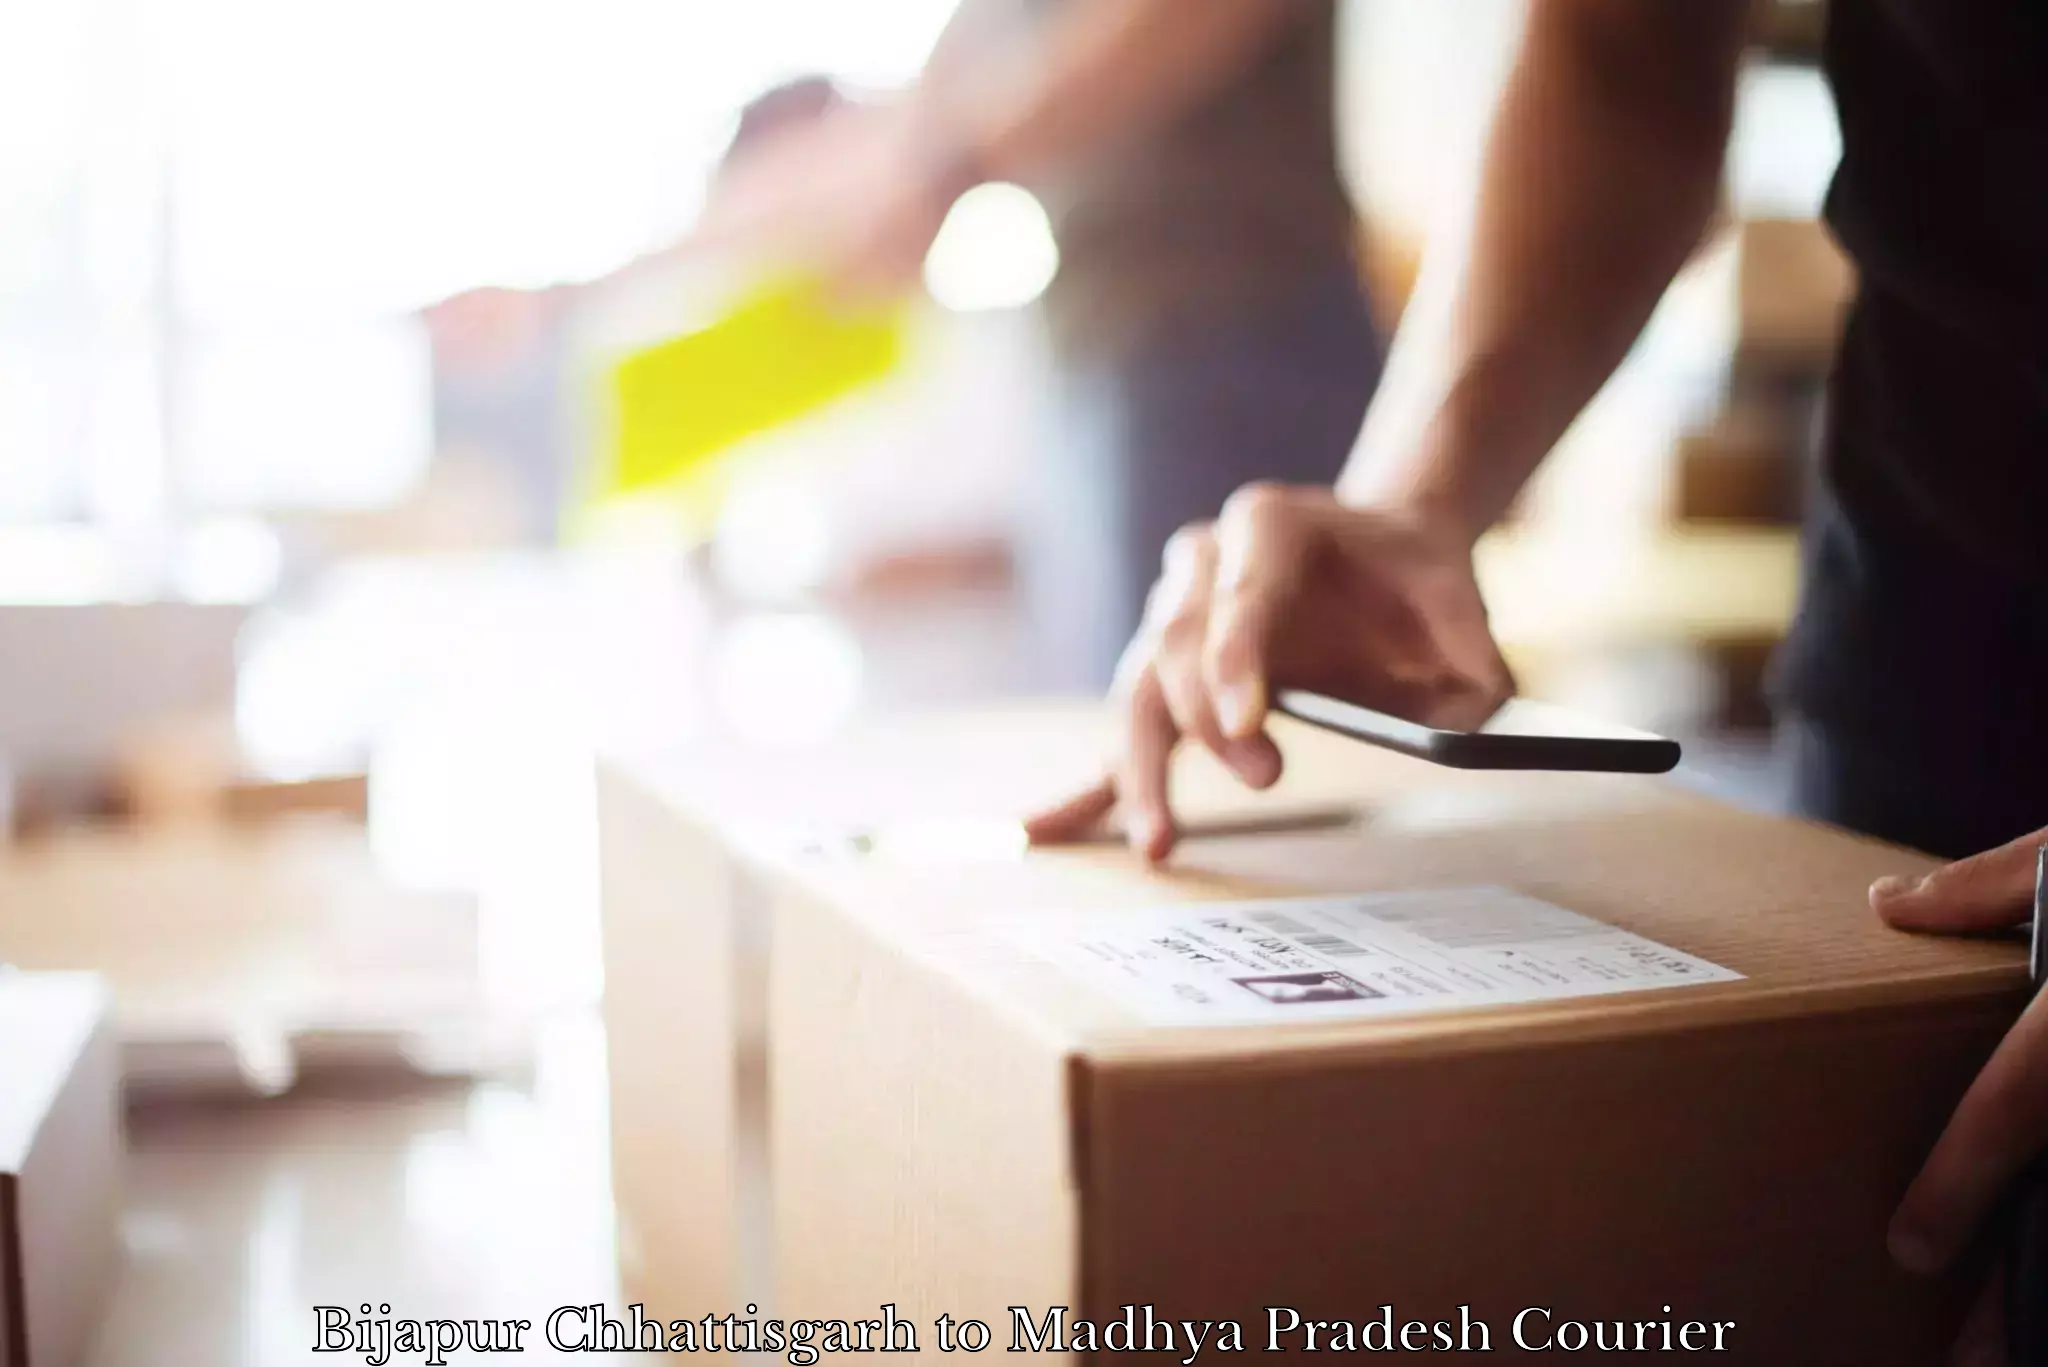 High-capacity parcel service Bijapur Chhattisgarh to Bina